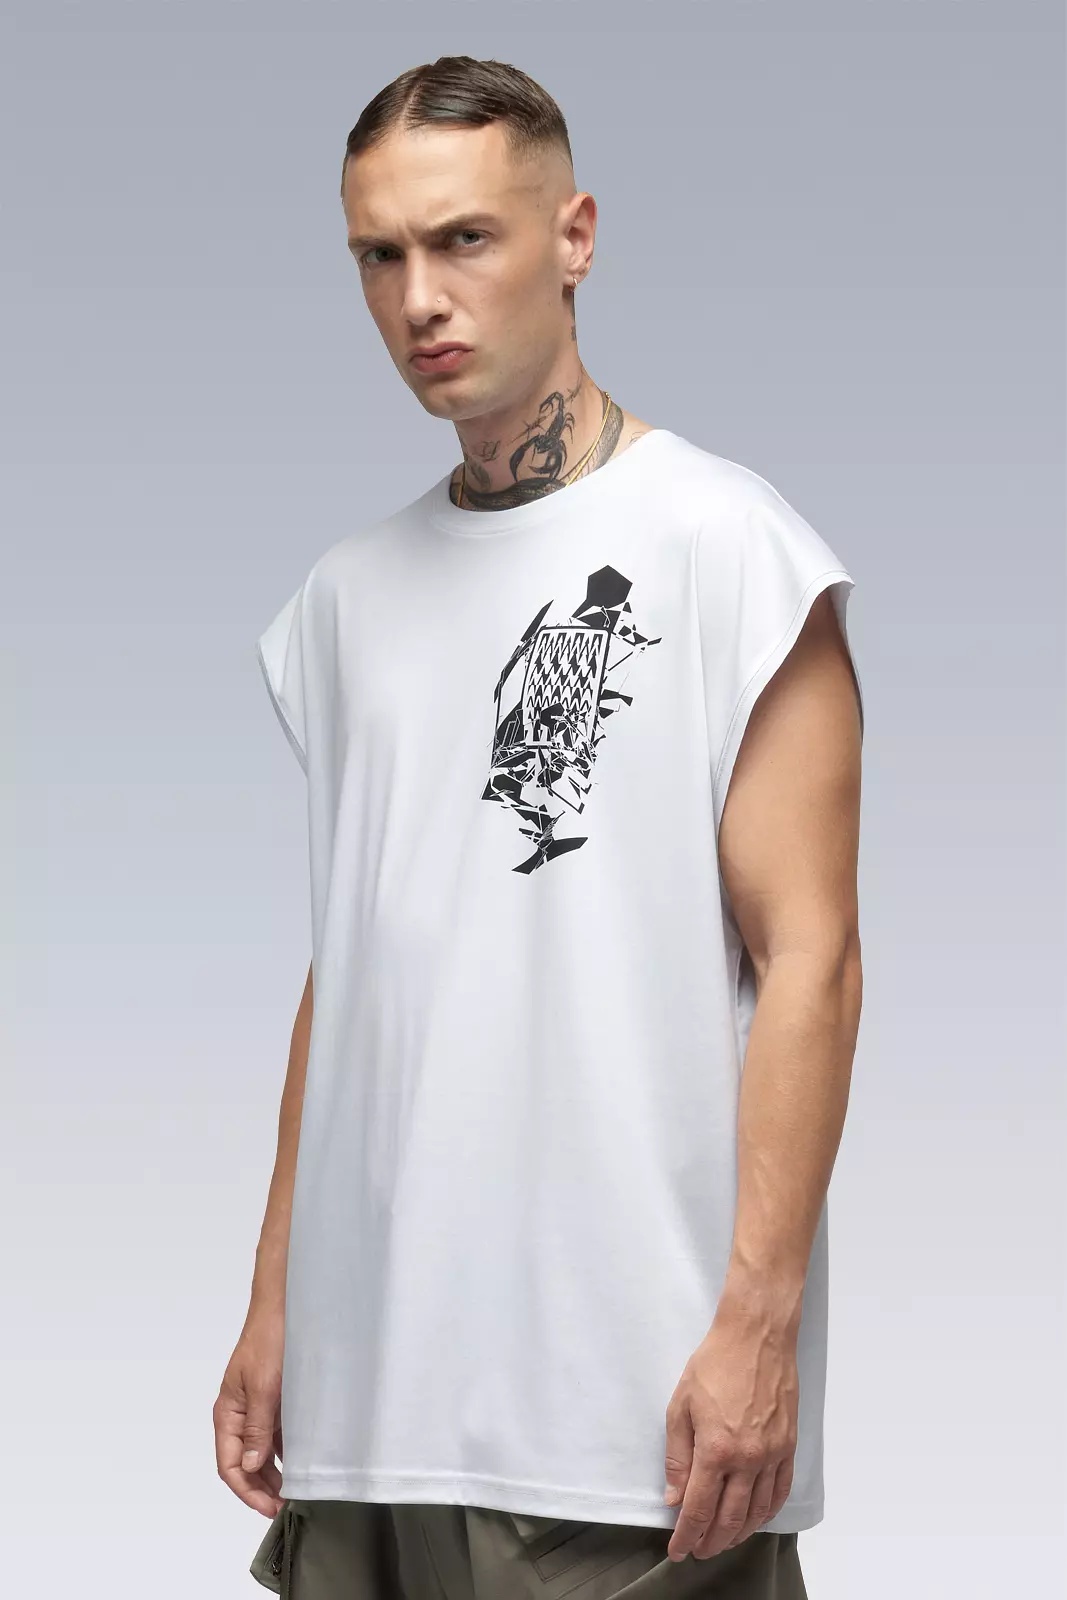 S25-PR-B 100% Cotton Mercerized Sleeveless T-shirt White - 8